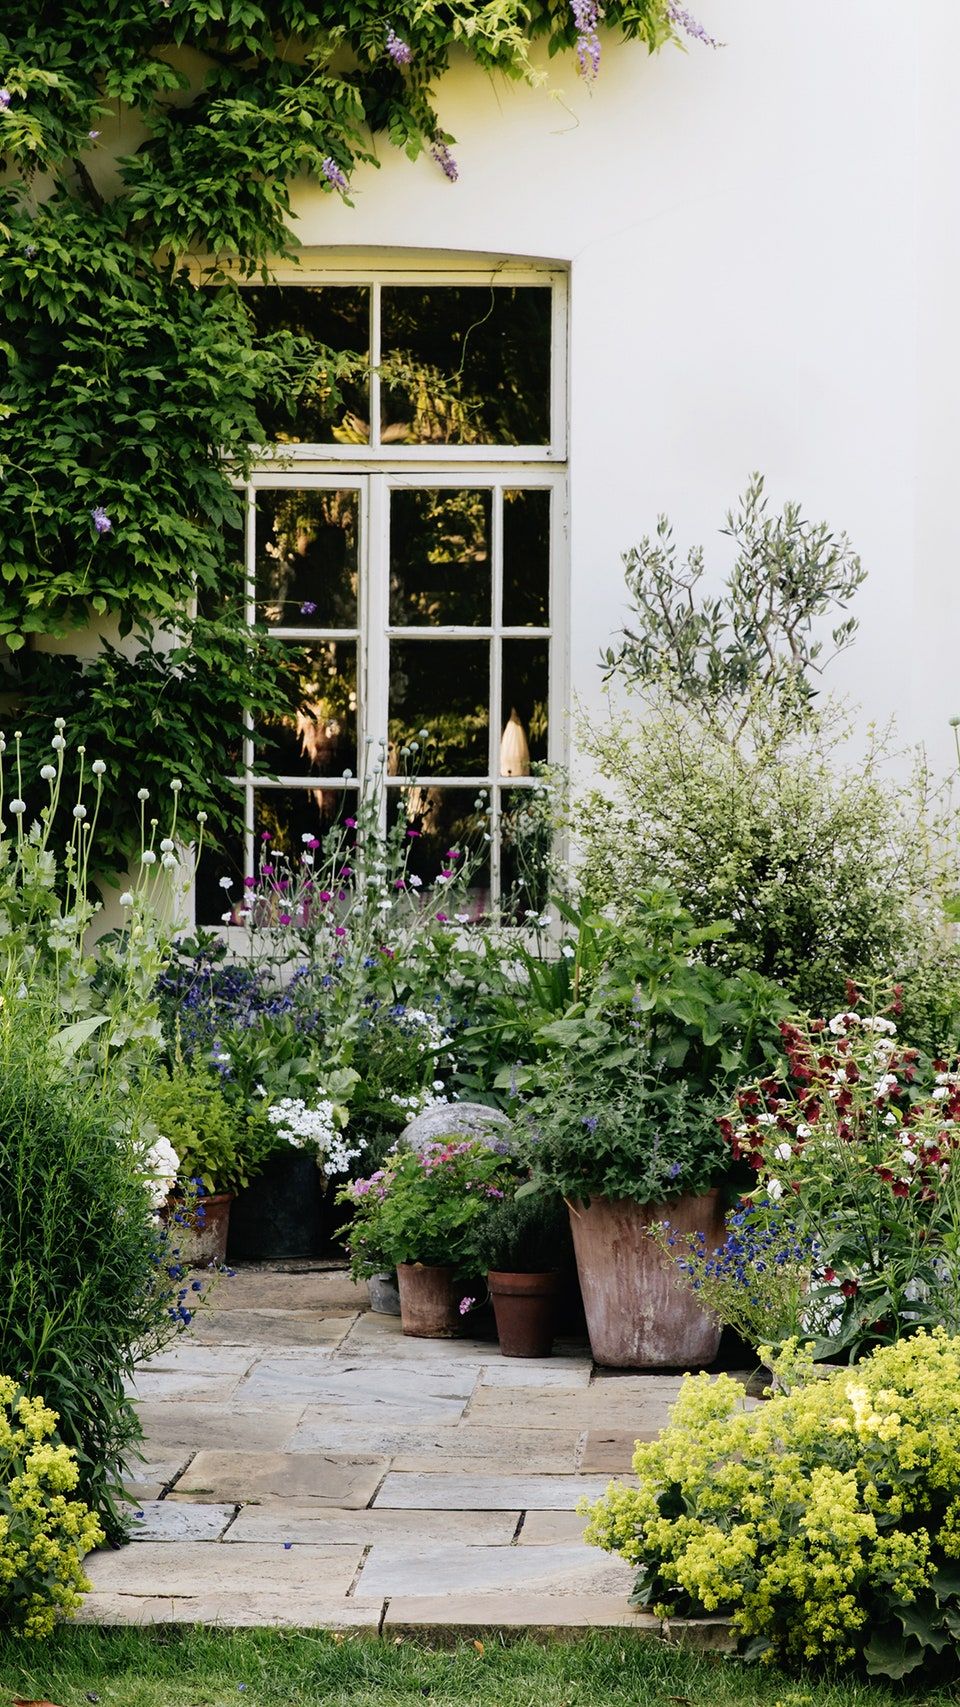 10 Expert Tips for Creating a Stunning Garden Oasis